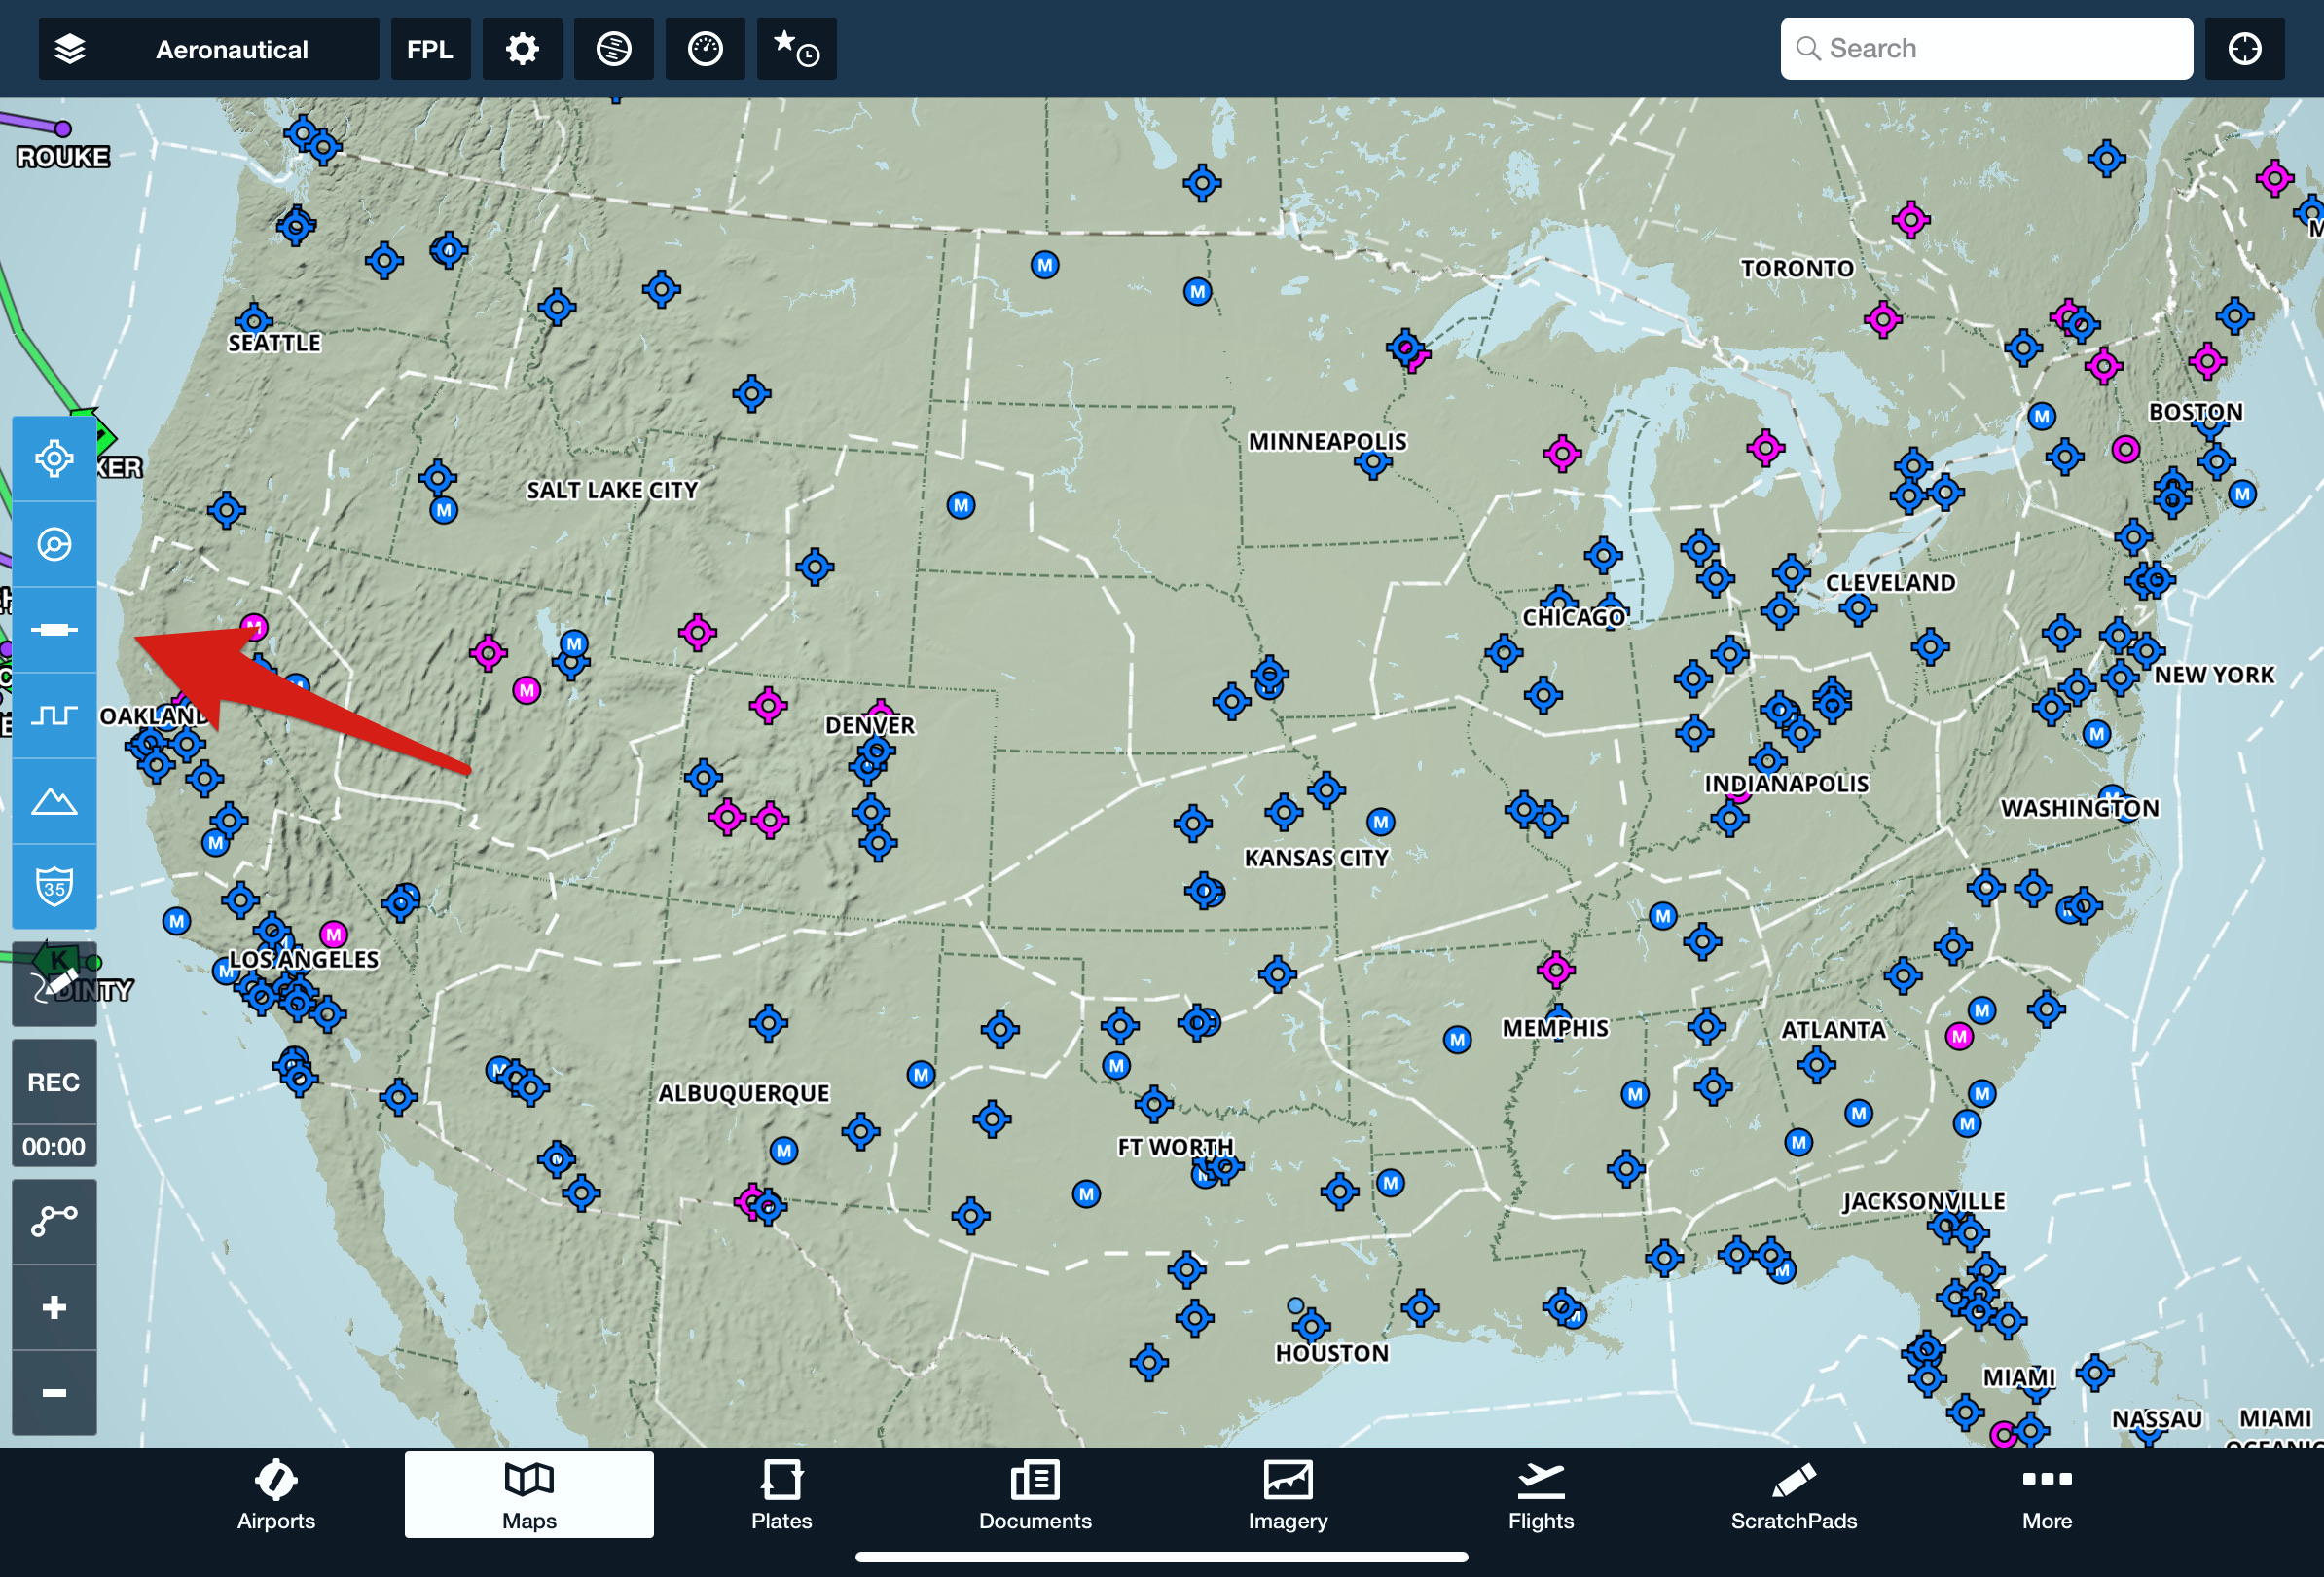 Aeronautical_Map_Filter_Buttons.png